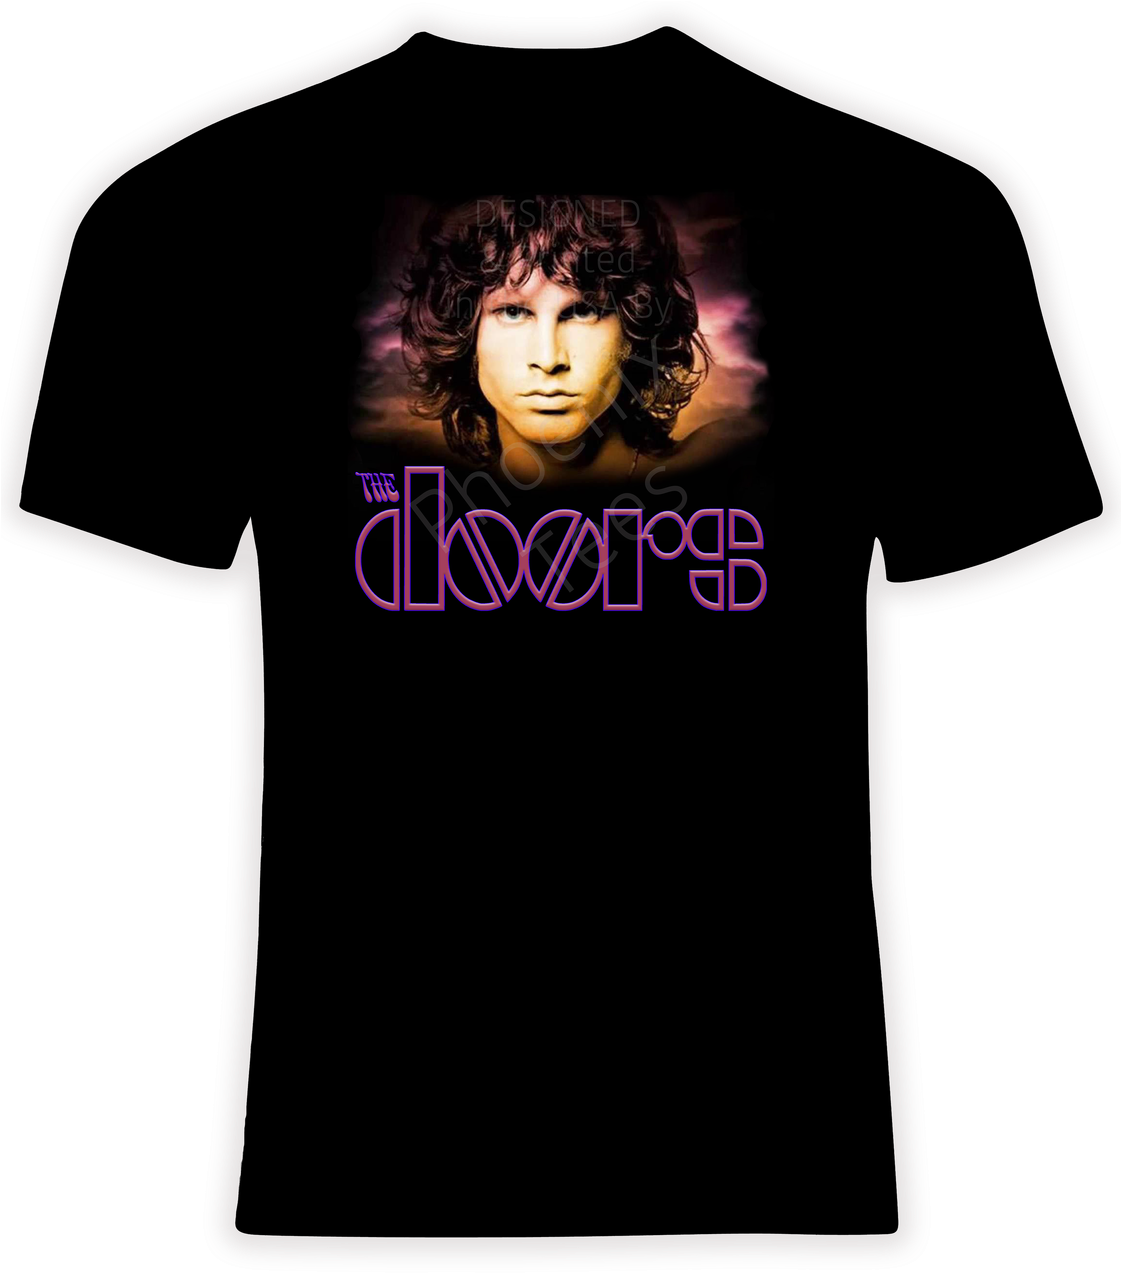 The Doors Band T Shirt Design PNG